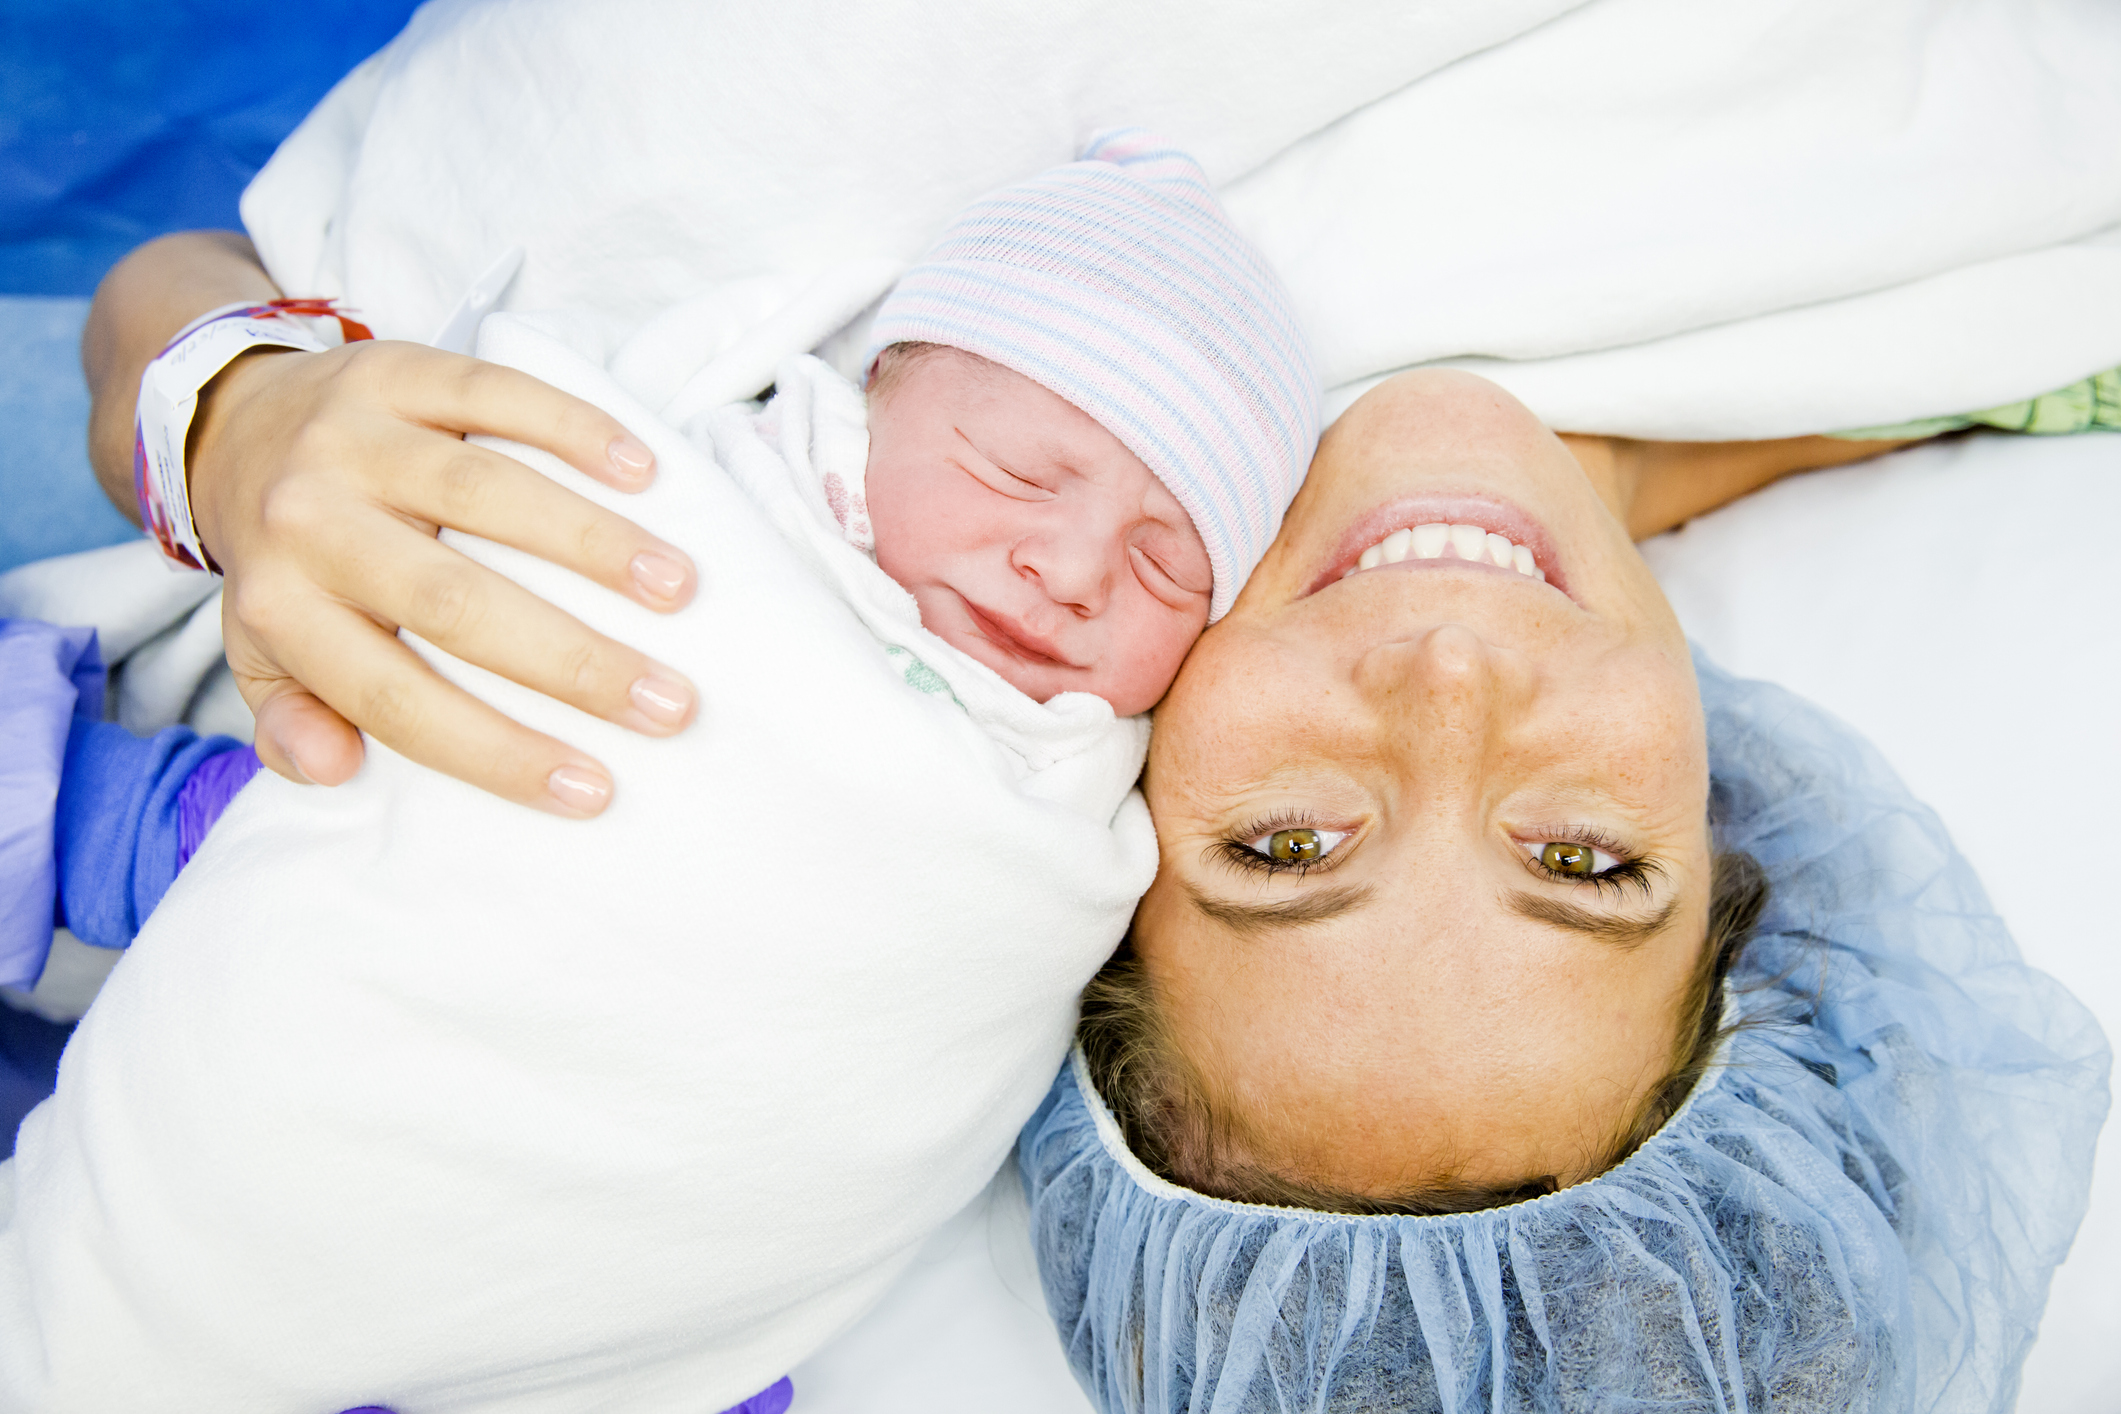 Ginecologista explica como funciona o parto cesárea